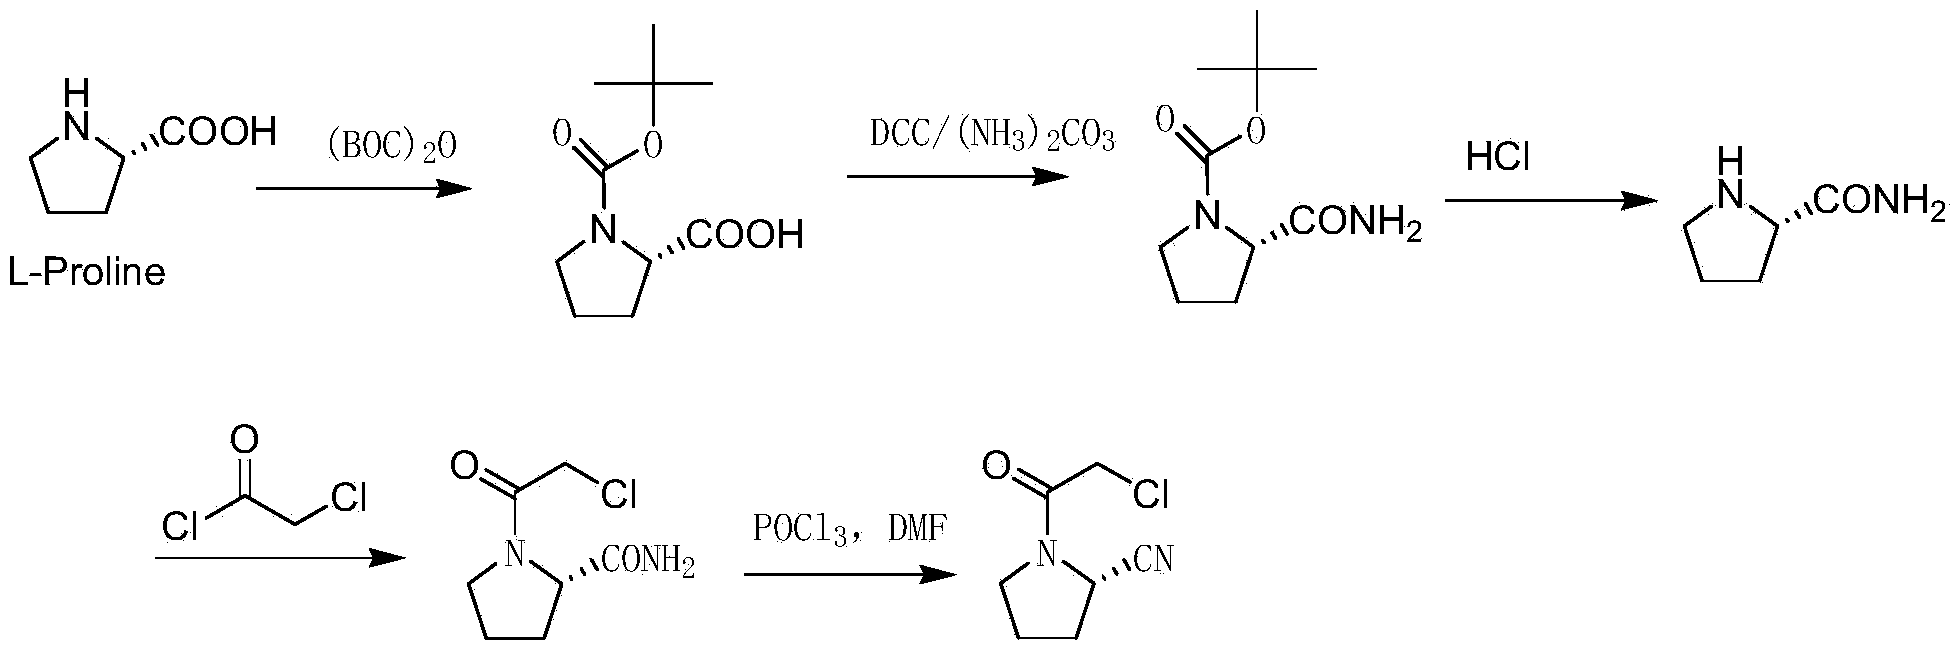 Method for preparing midbody (2S)-N-chloracetyl-2-cyano tetrahydropyrrole of vildagliptin